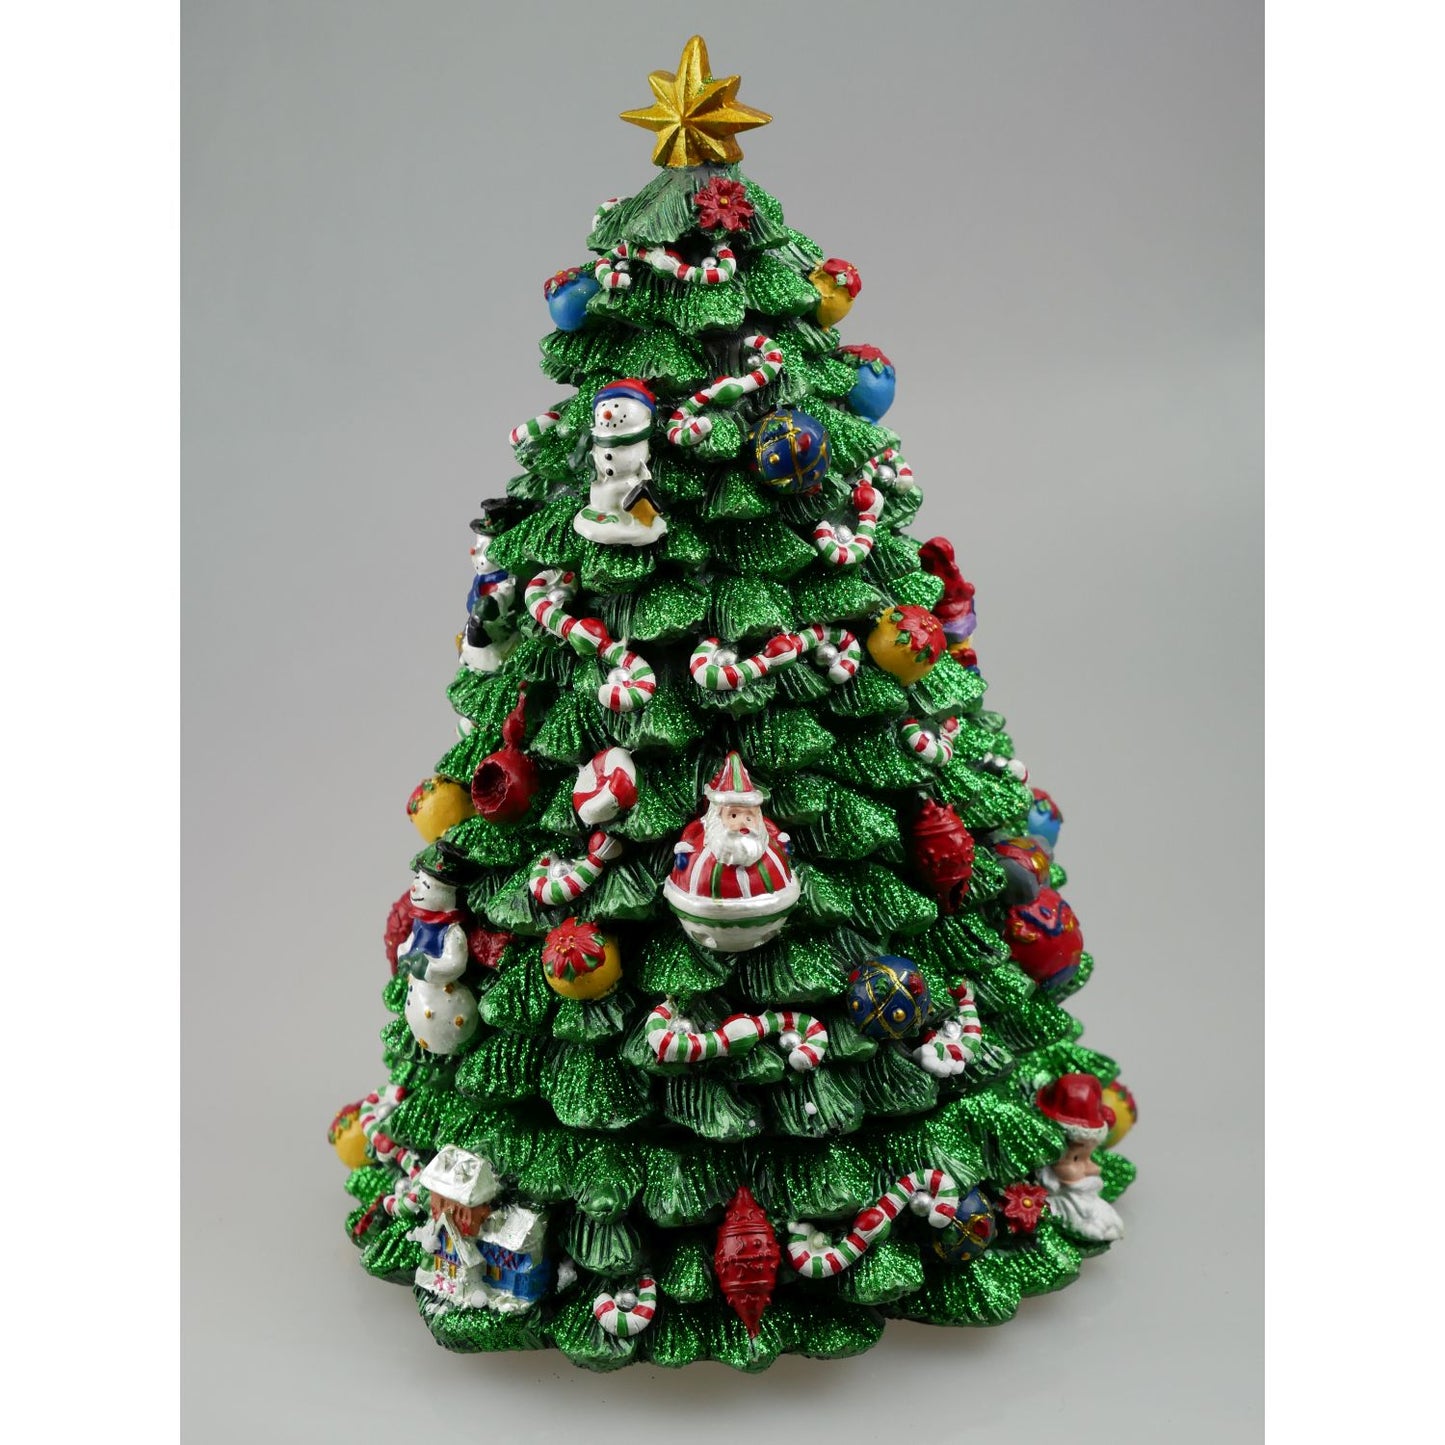 Musicbox Kingdom 9" The Christmas Tree Turns To The Melody “O Christmas Tree”